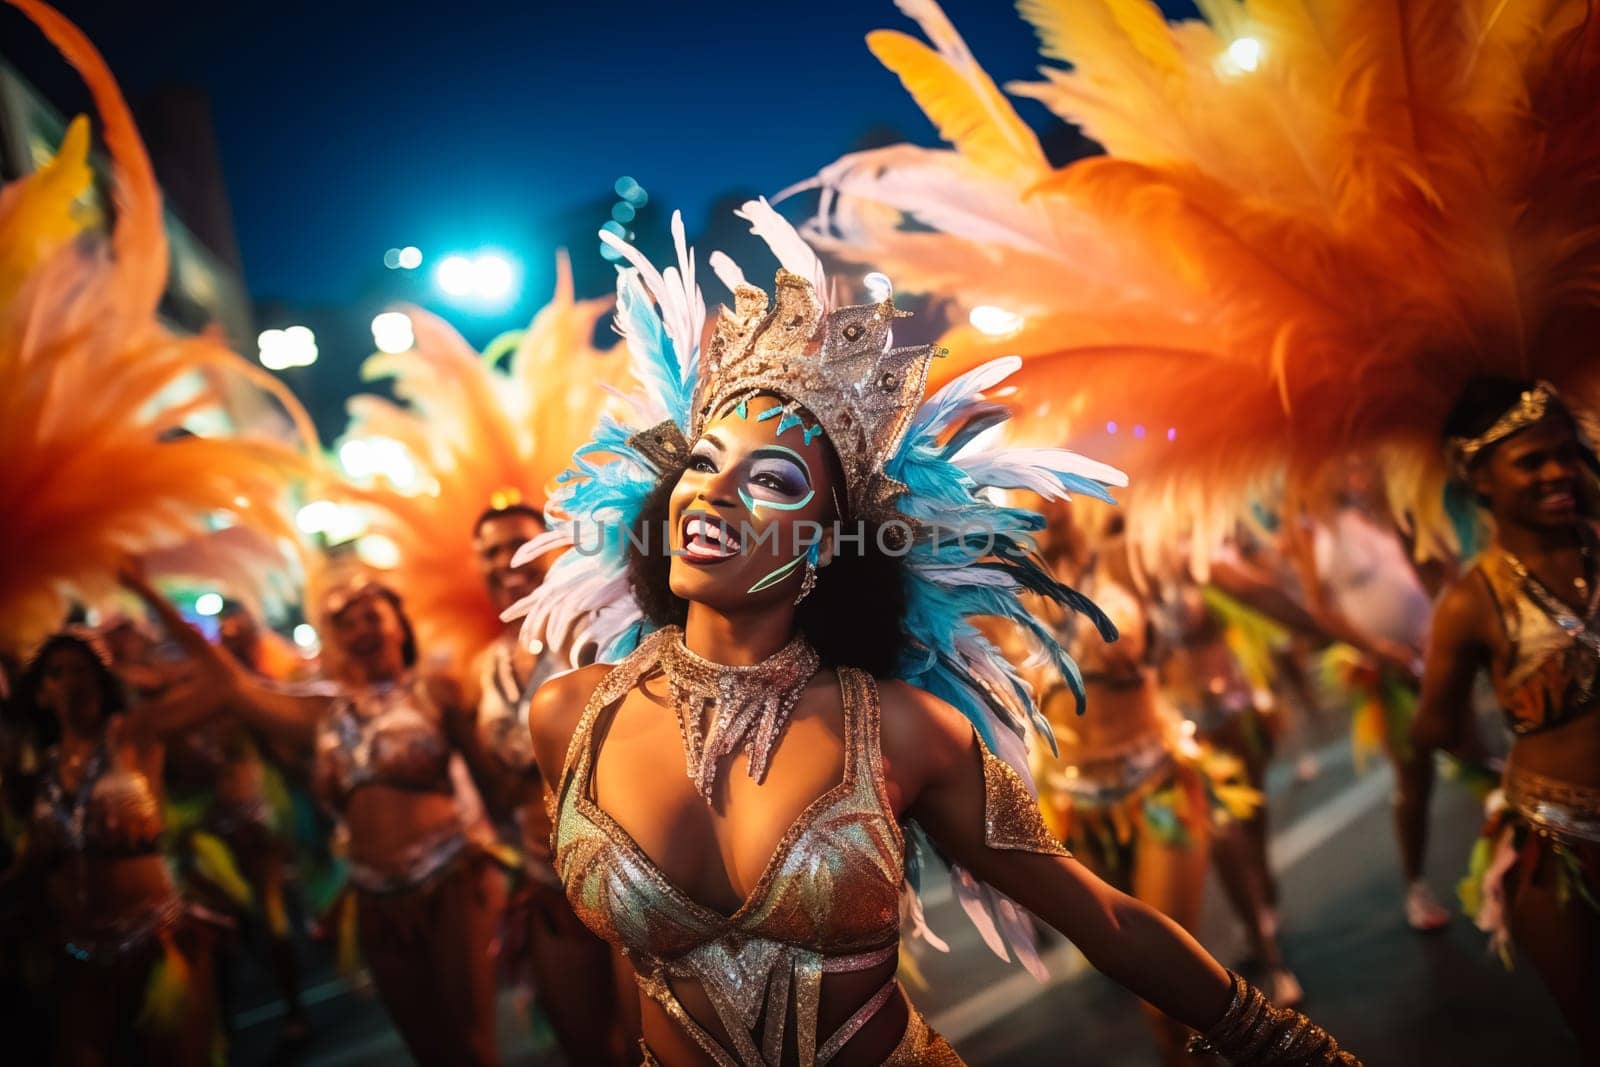 Rio Carnival Dancer in Vibrant Costume by dimol